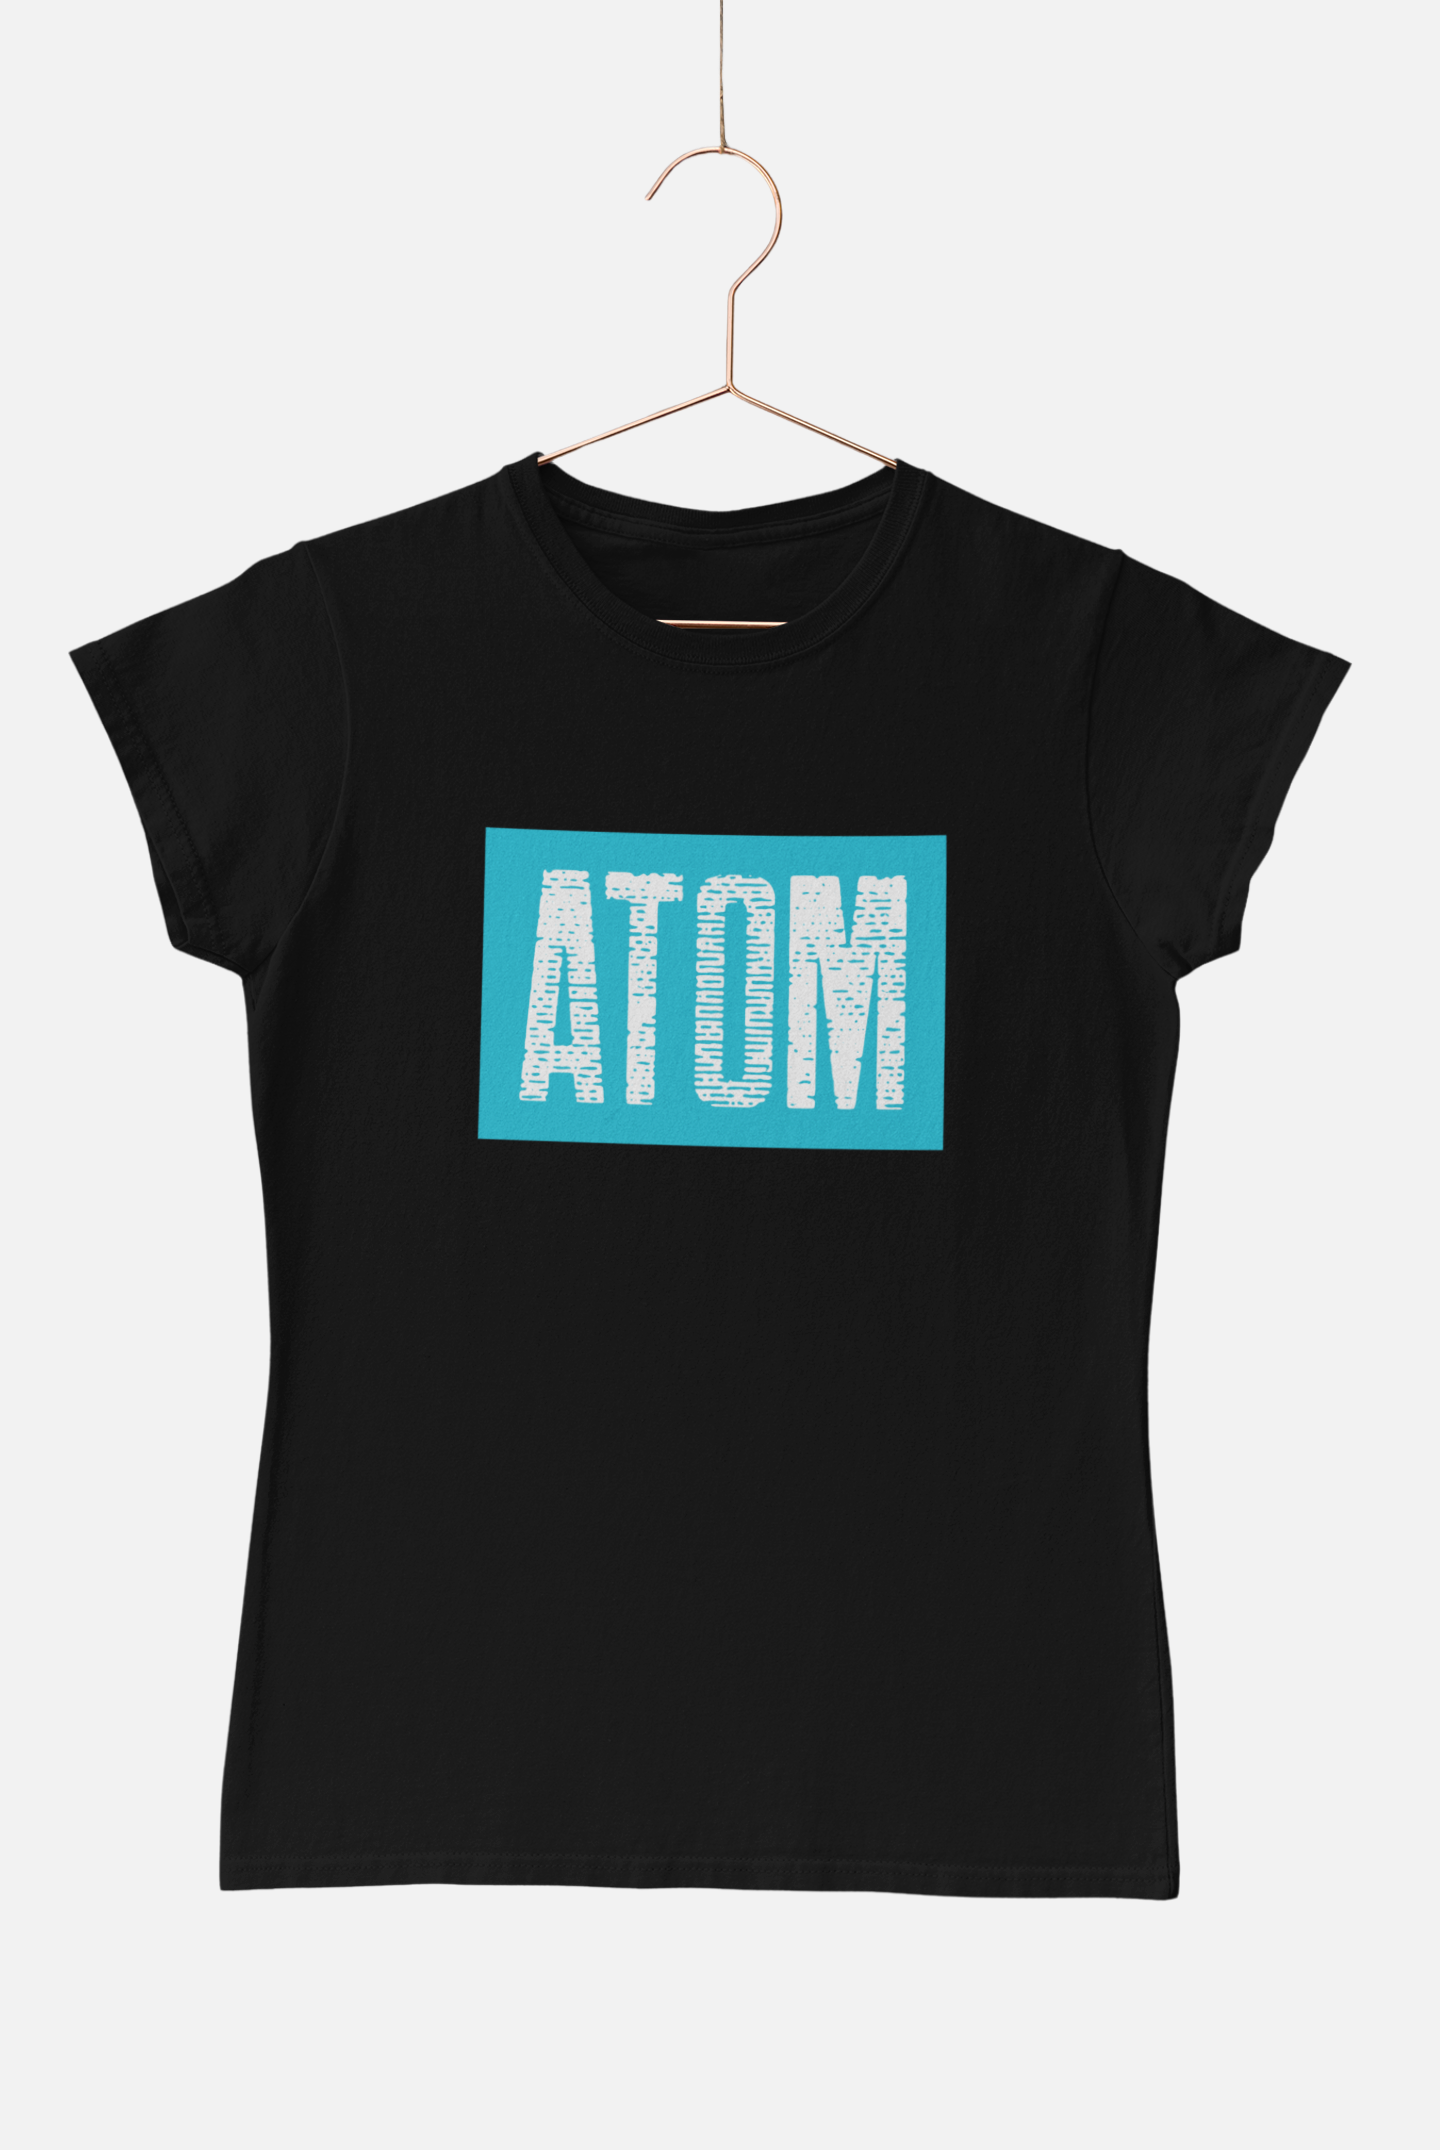 ATOM Signature Blue BG Black T-Shirt for Women. 